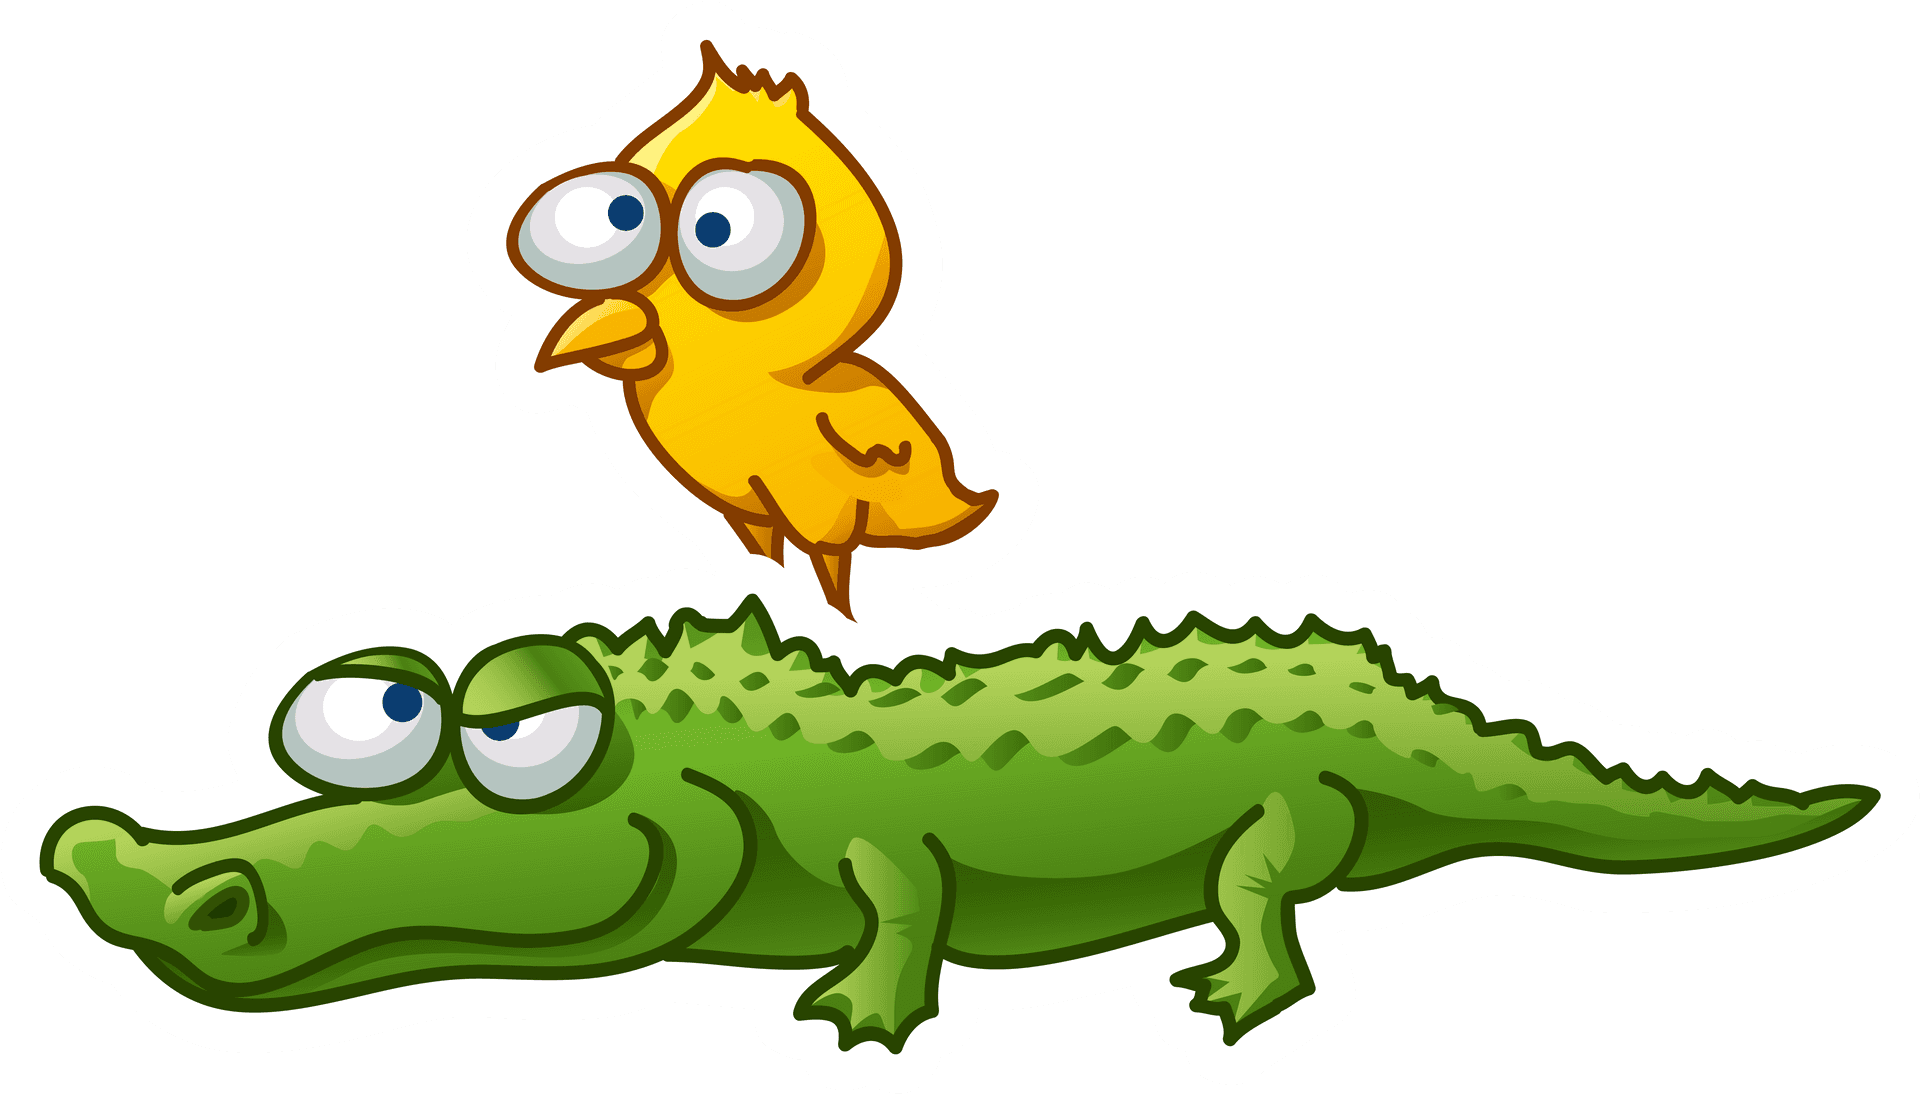 Cartoon Crocodileand Bird Friends PNG